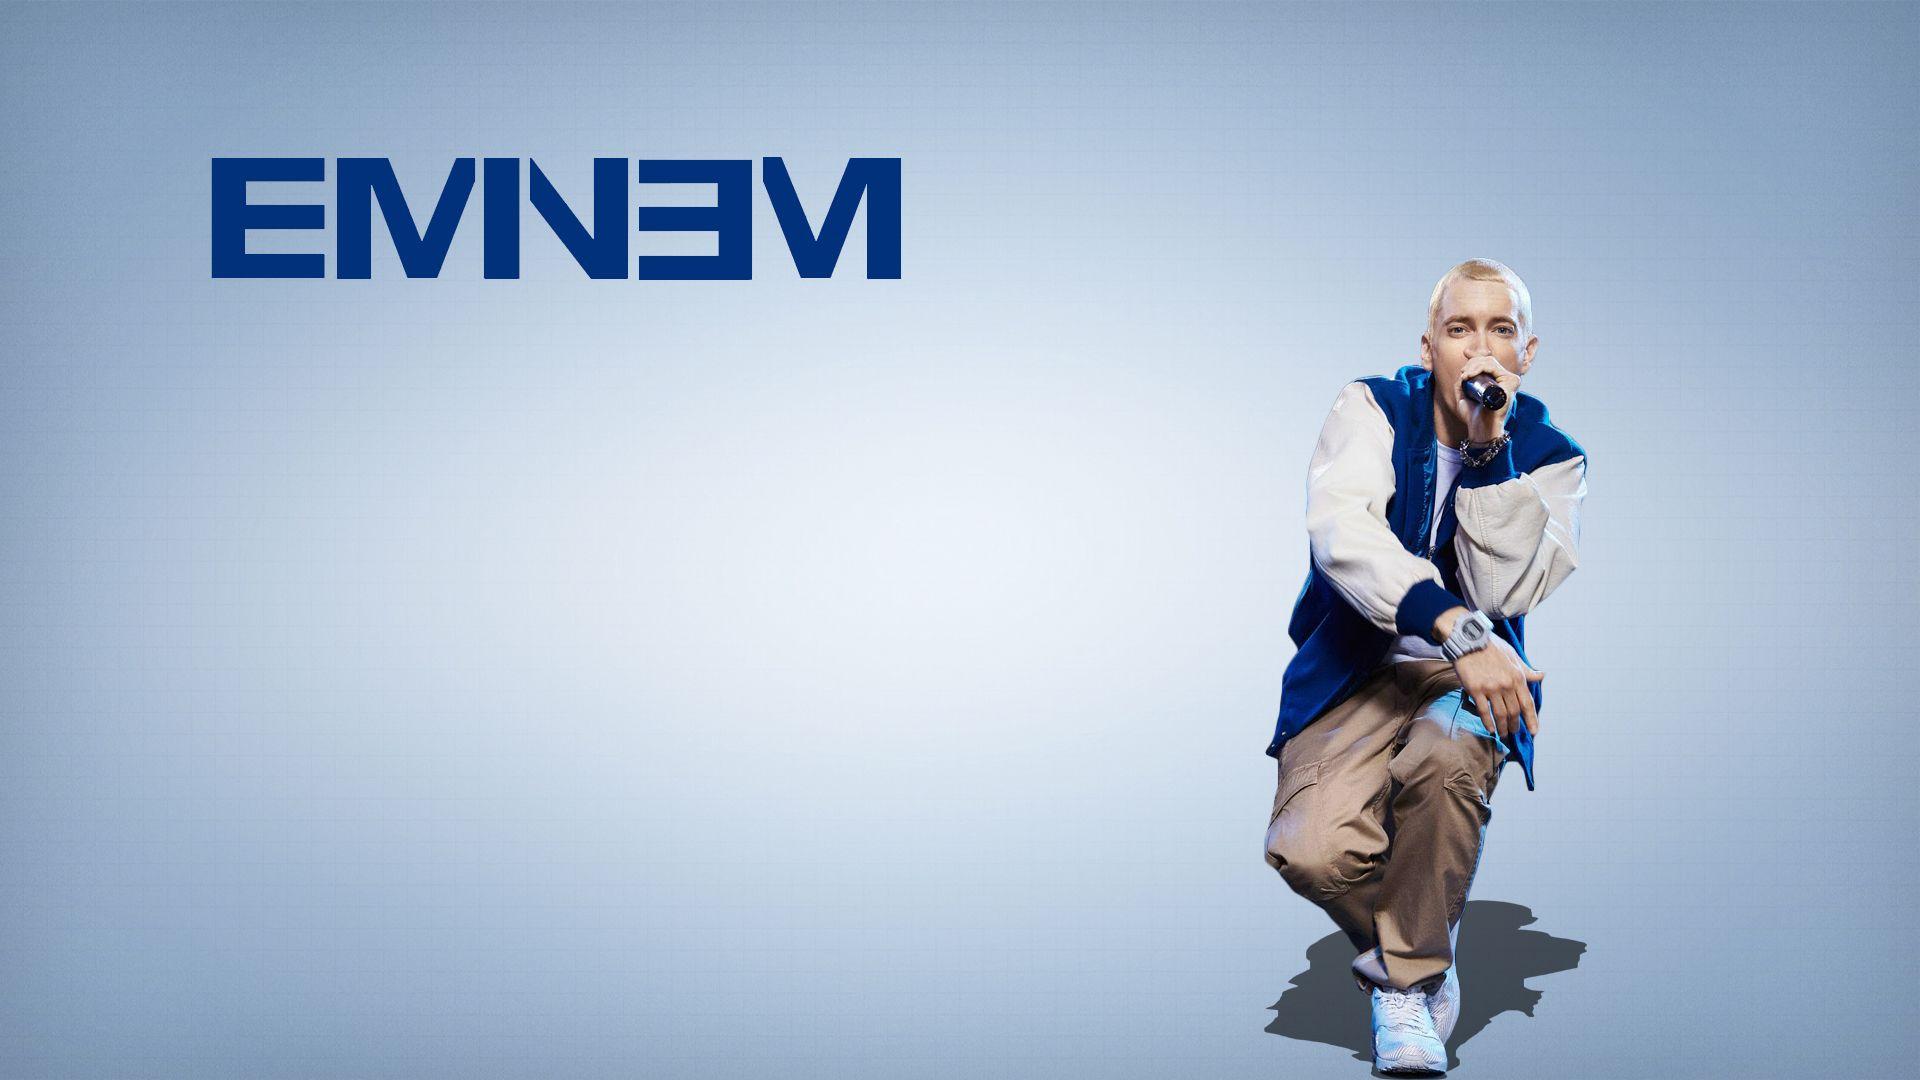 Quality Cool Eminem Image